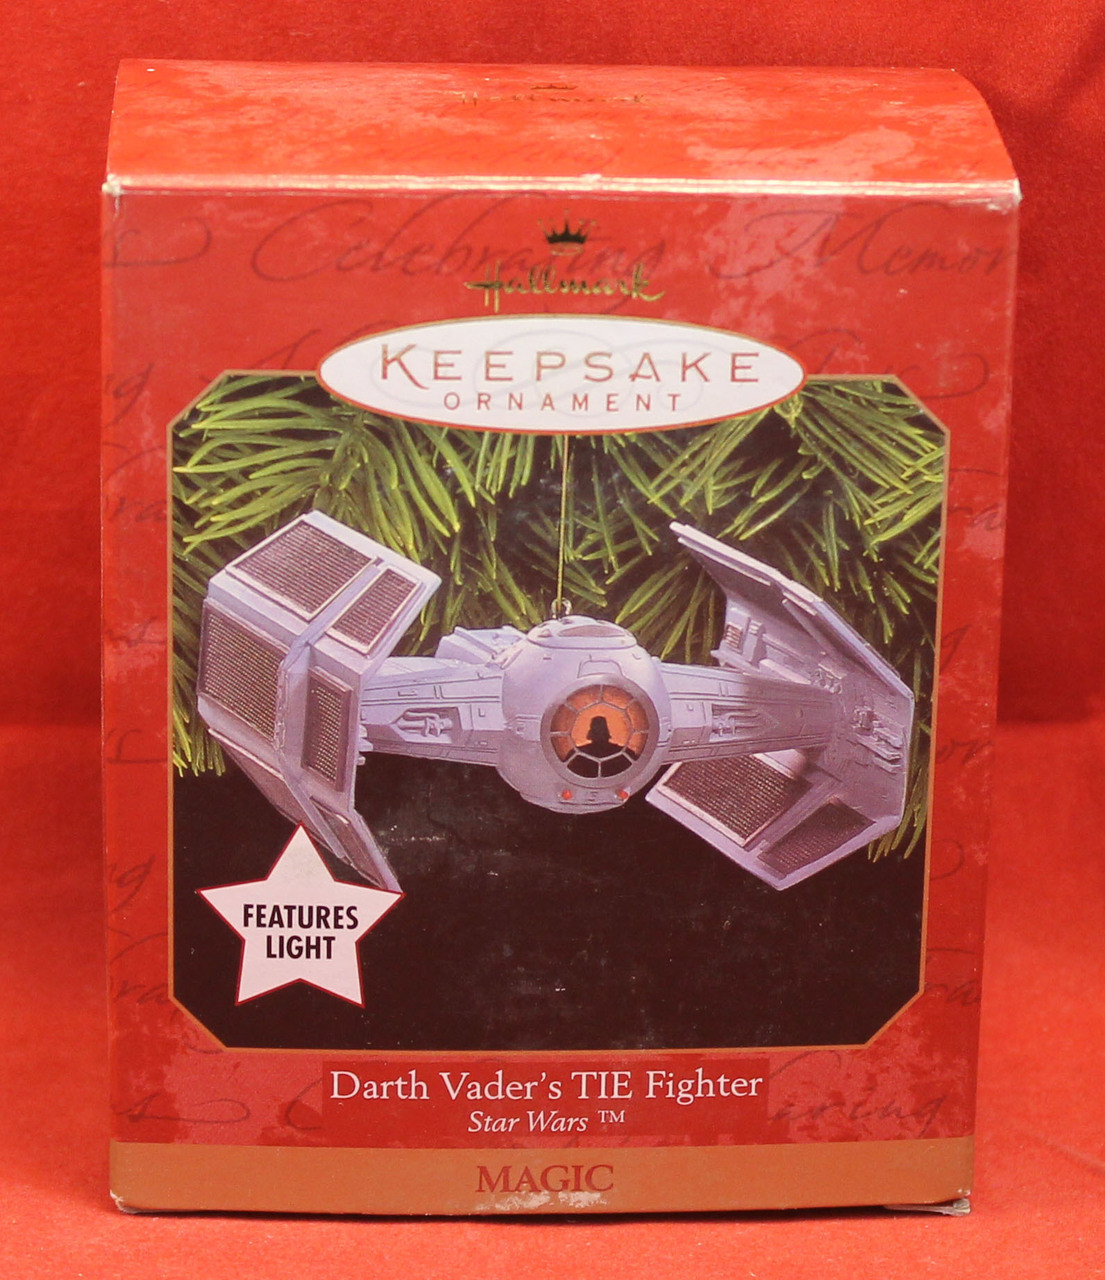 Star Wars Christmas Ornament - Darth Vader's TIE Fighter